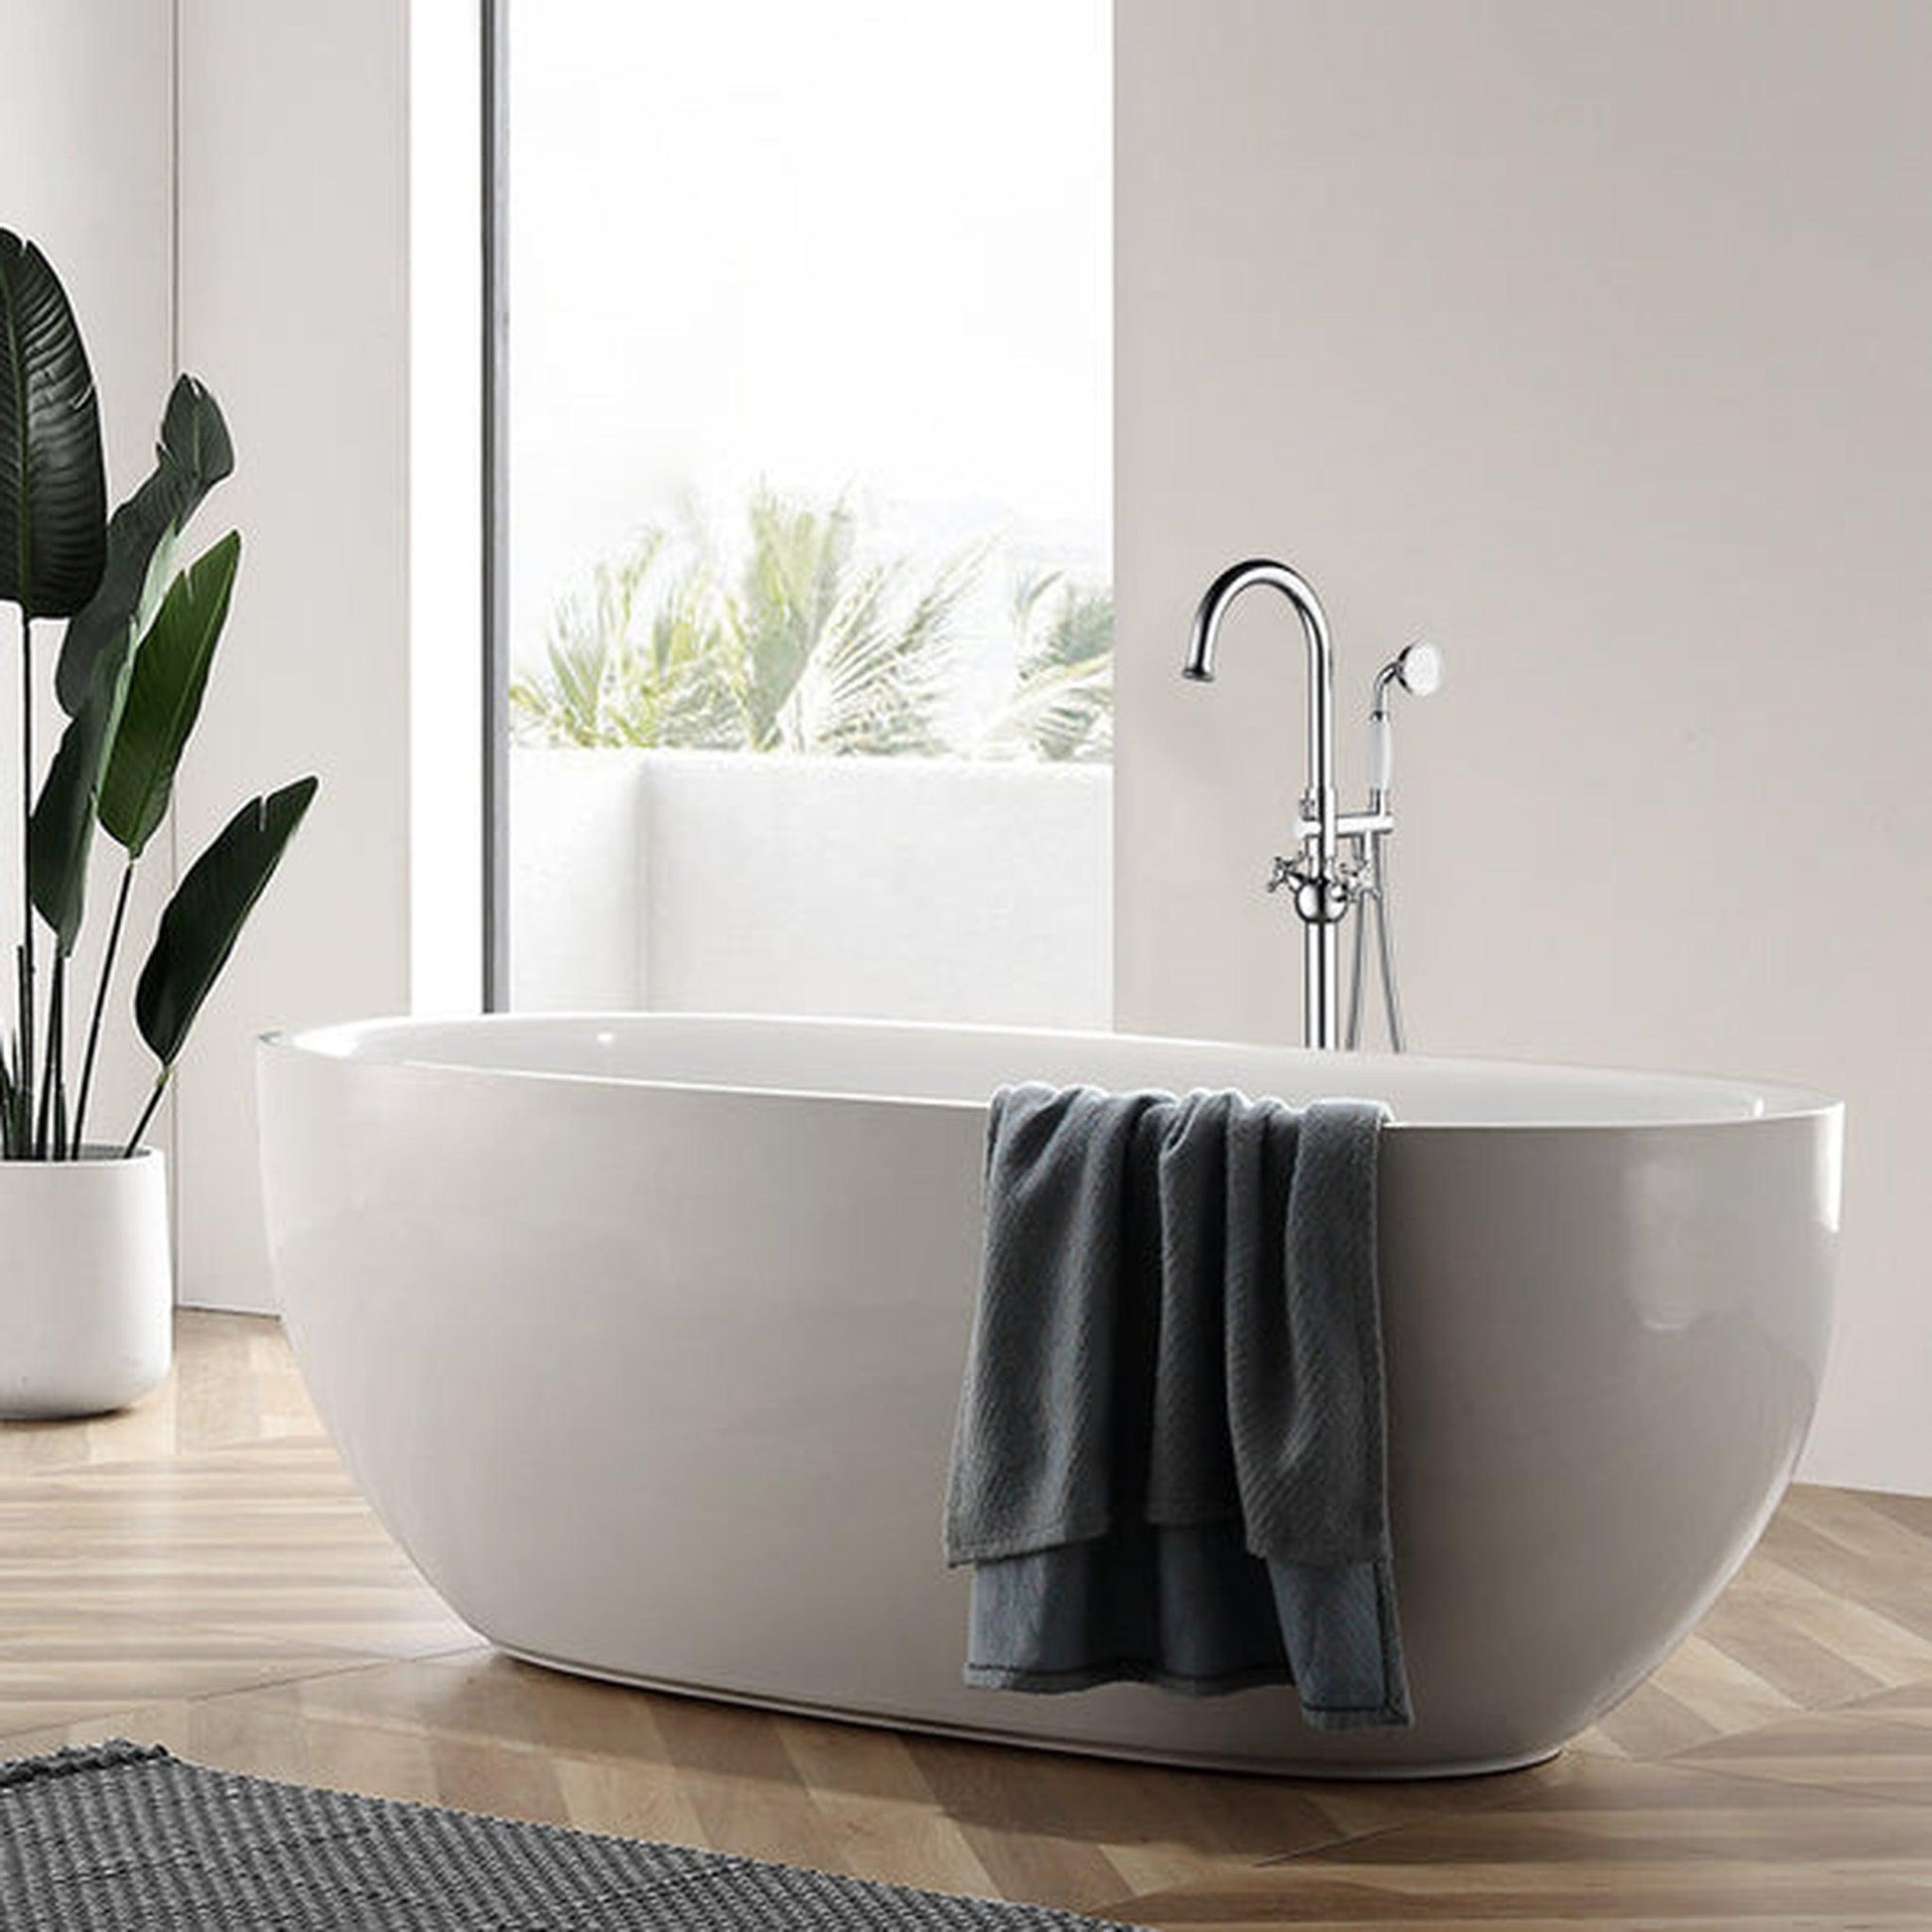 Vanity Art VA2029 47" Polished Chrome Freestanding Floor Mounted Bathtub Faucet With Handheld Shower